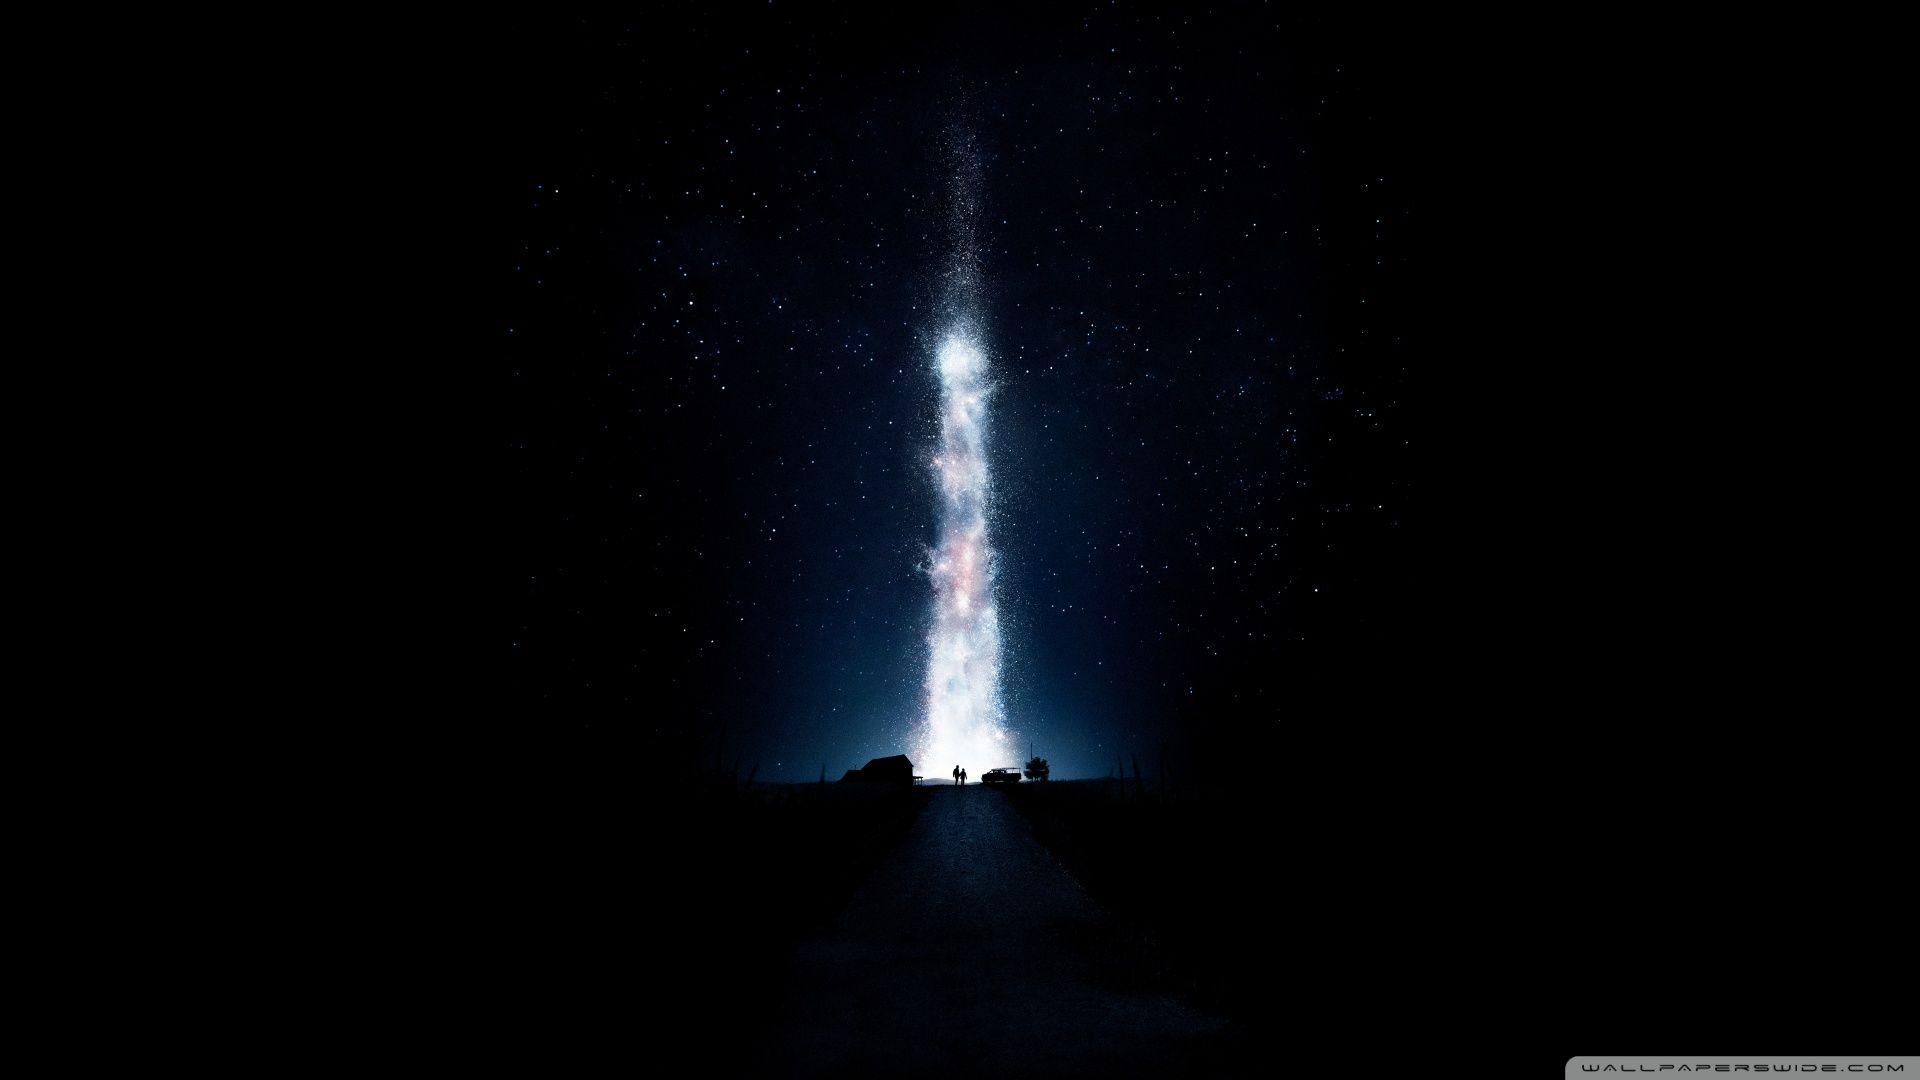 Interstellar Space 2014 Movie HD desktop wallpaper, Widescreen